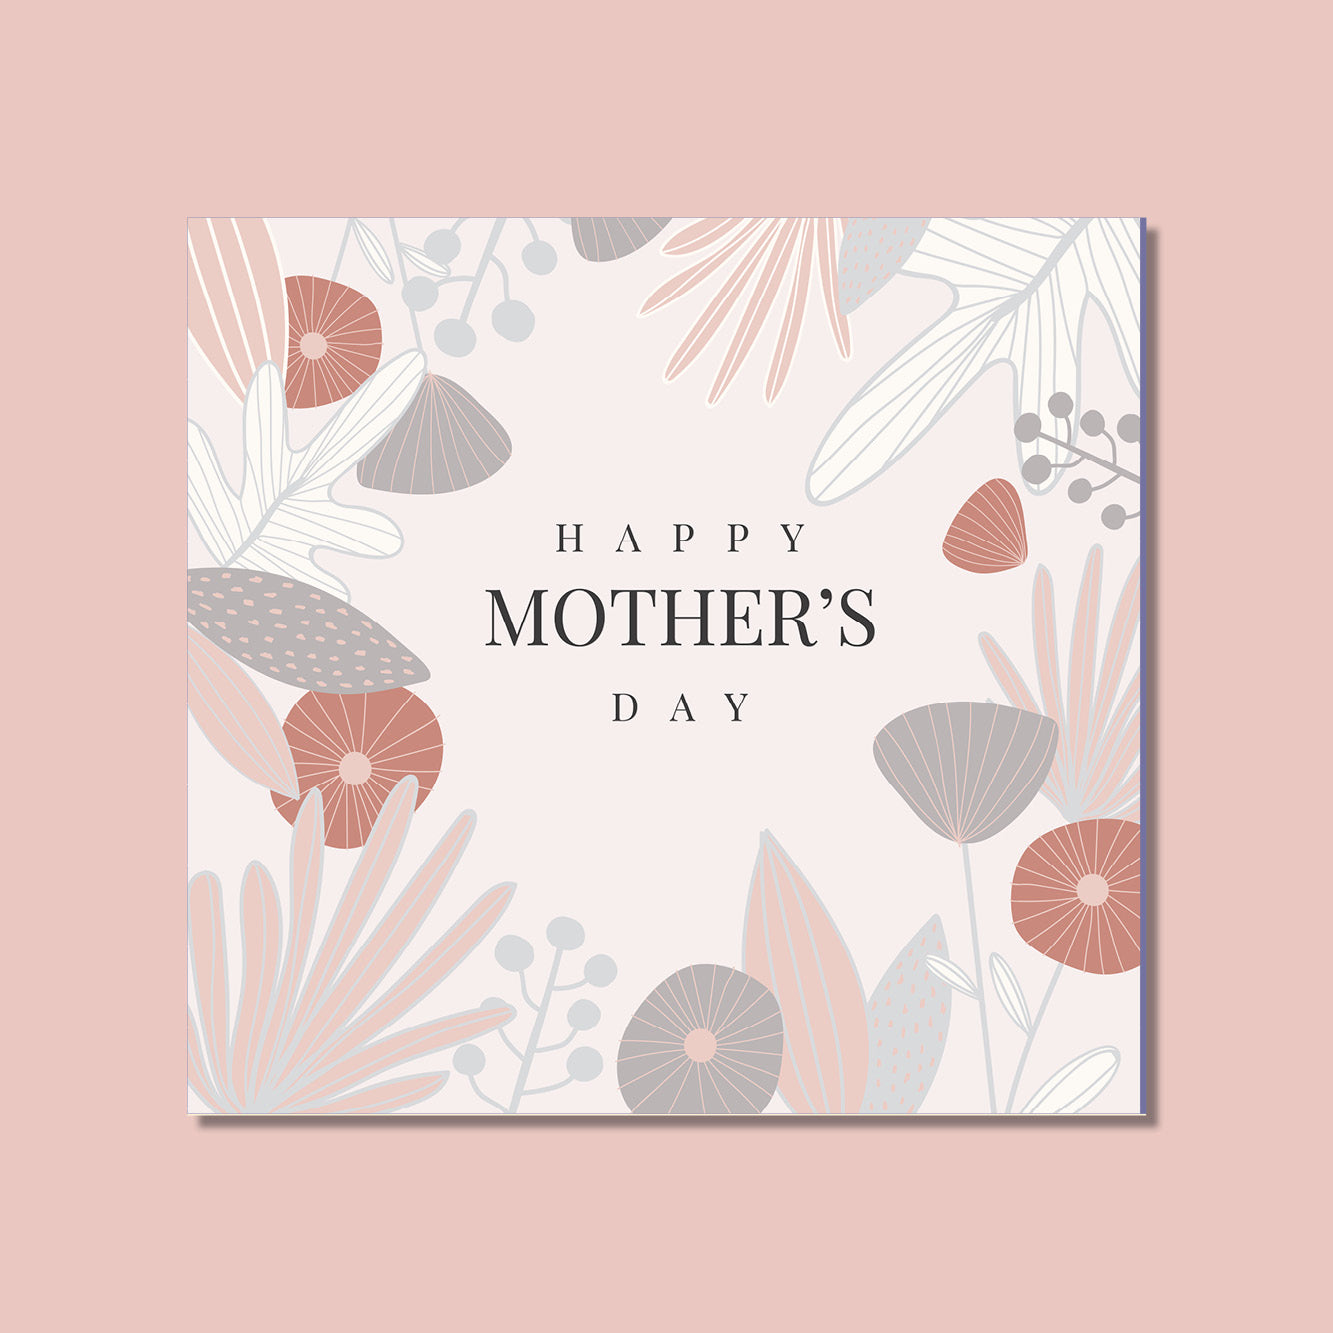 Mother's Day - Pastel vectors